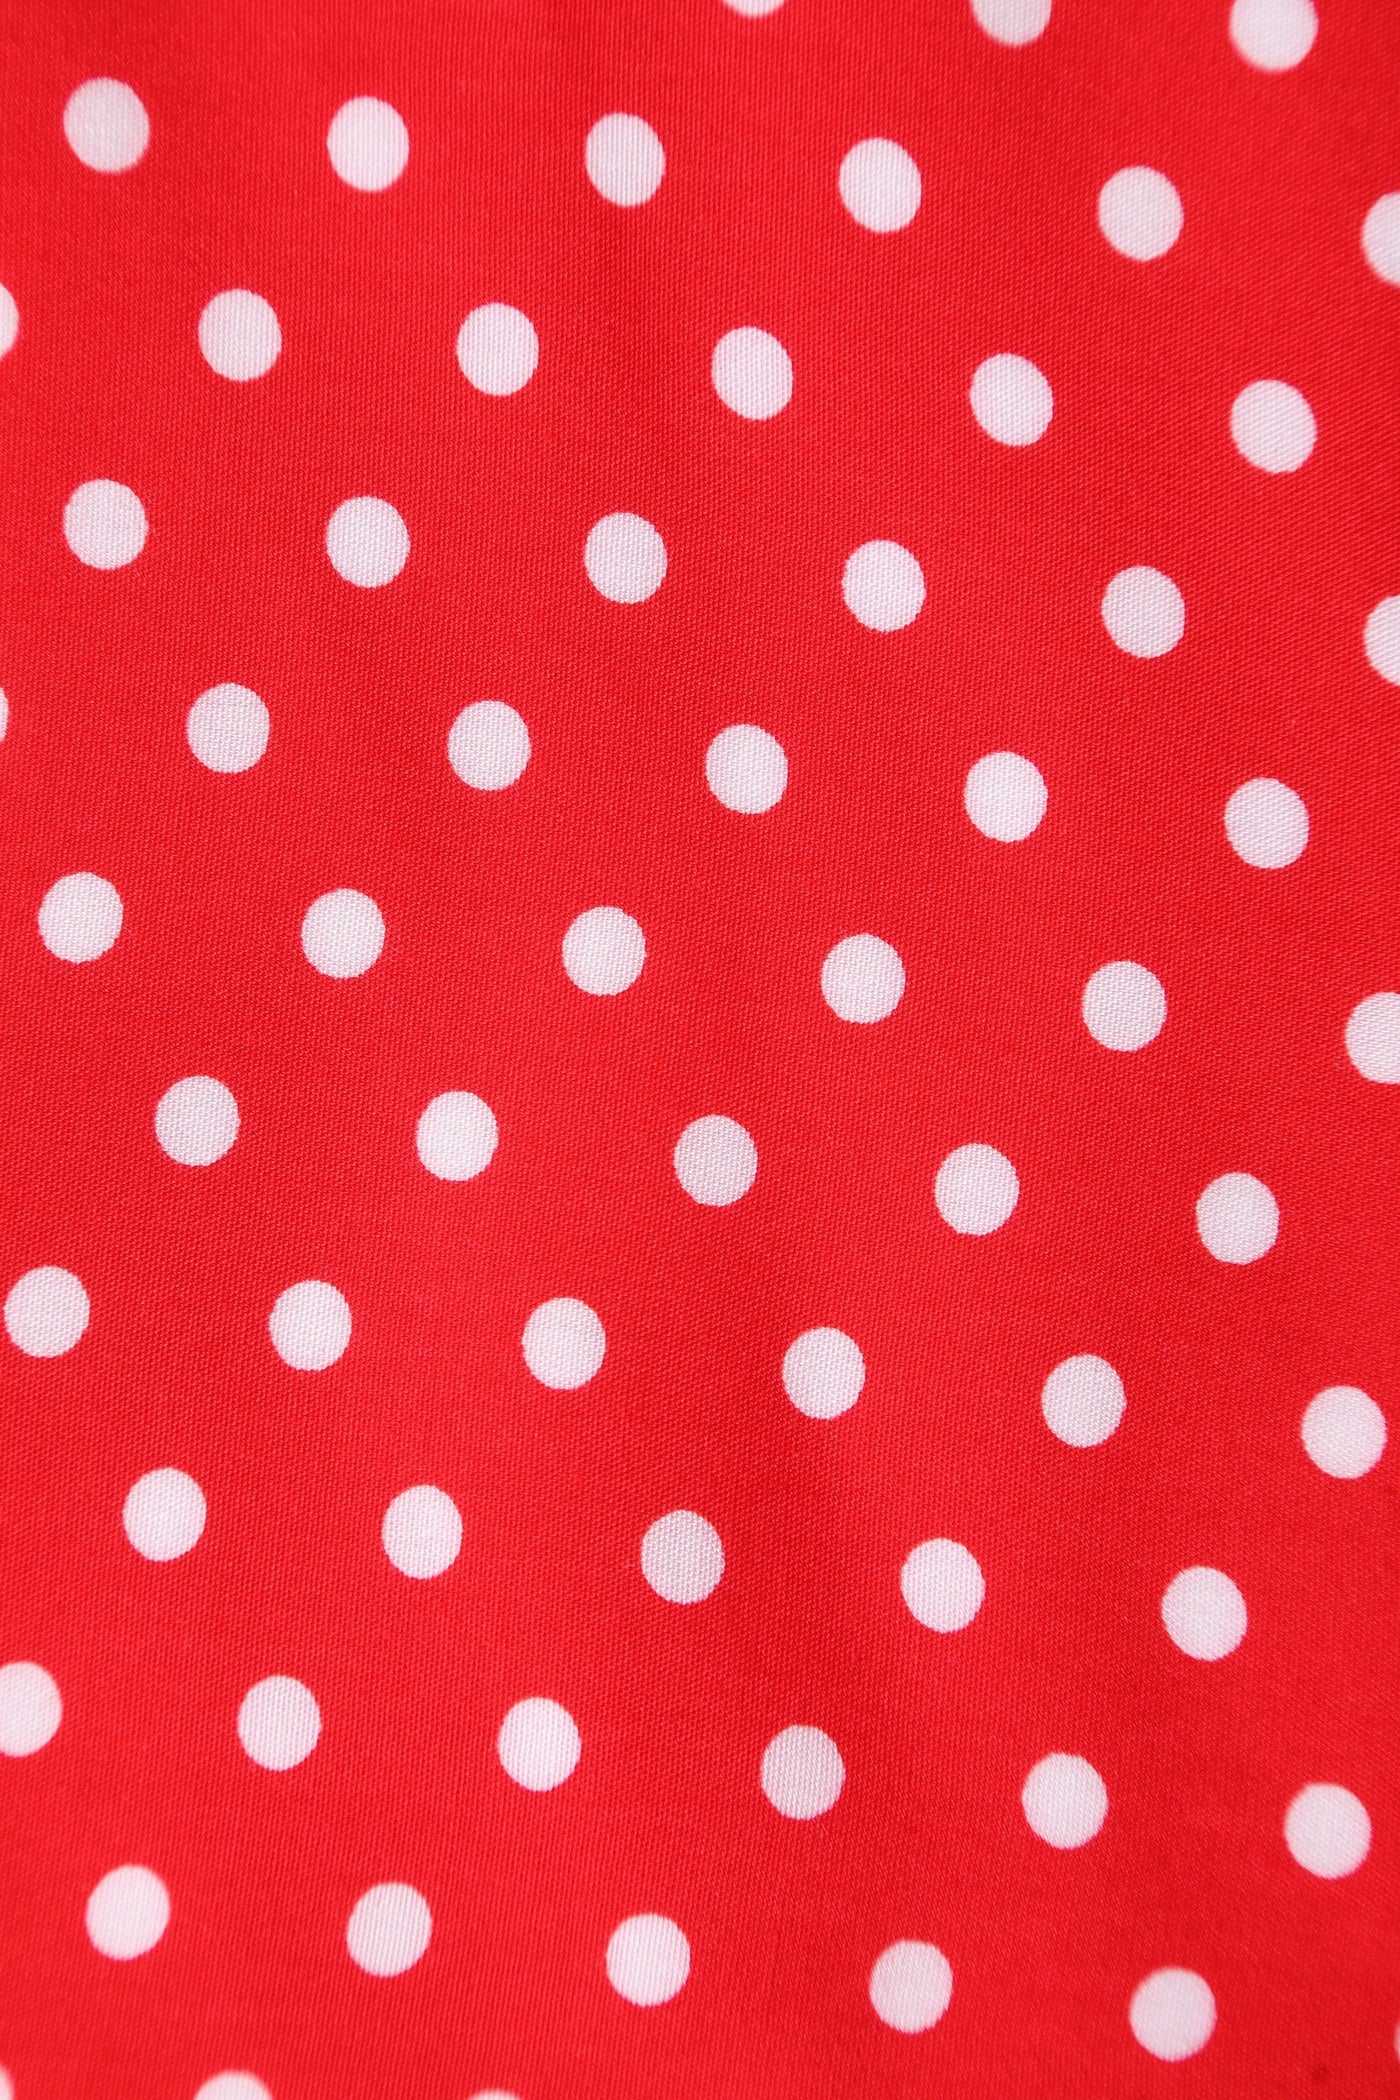 Red Polka Dot Shirt Dress